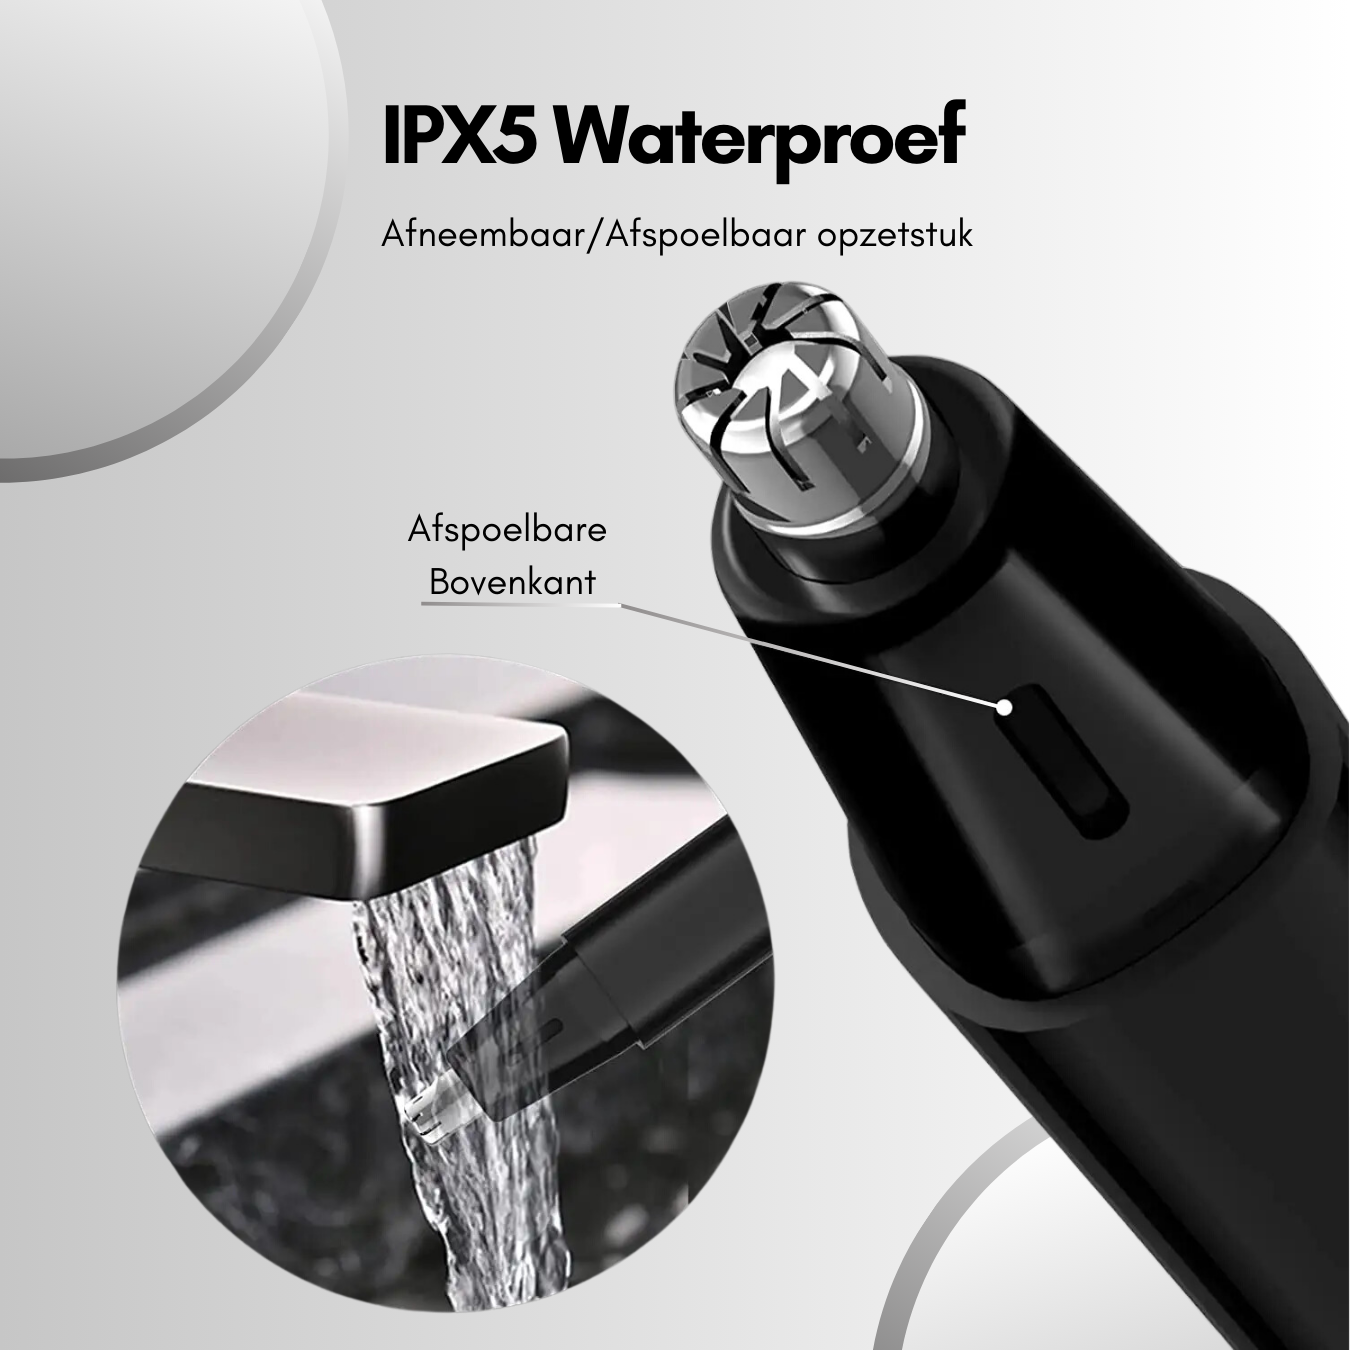 PrecisionPro neus en oorhaar wenkbrauw trimmer van Trimly IPX5 waterproef technologie 